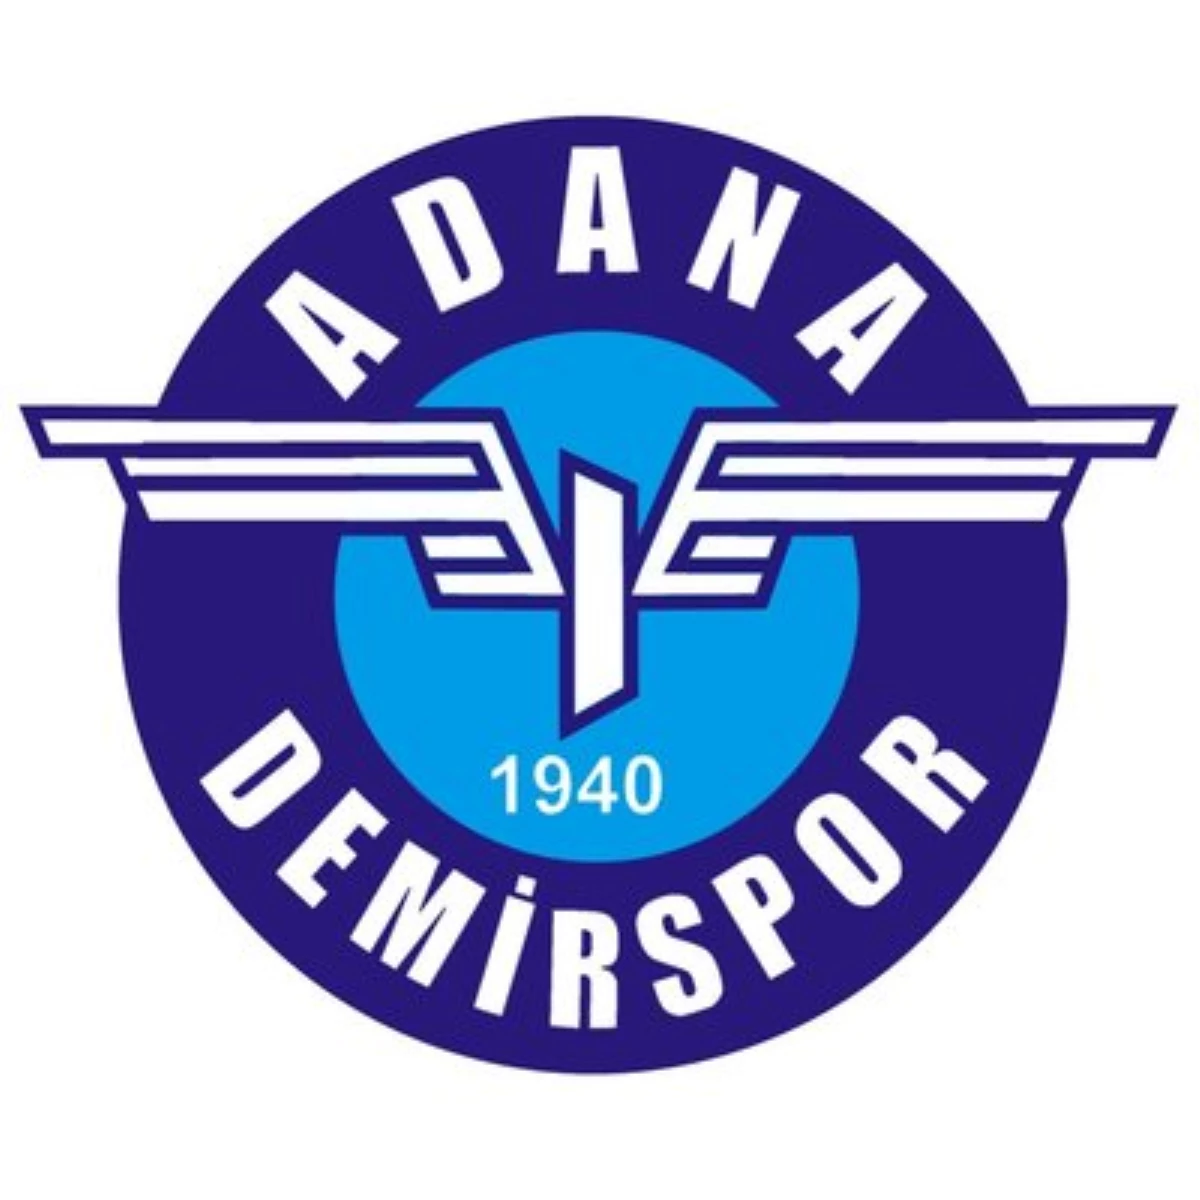 Adana Demirspor\'da Transfer